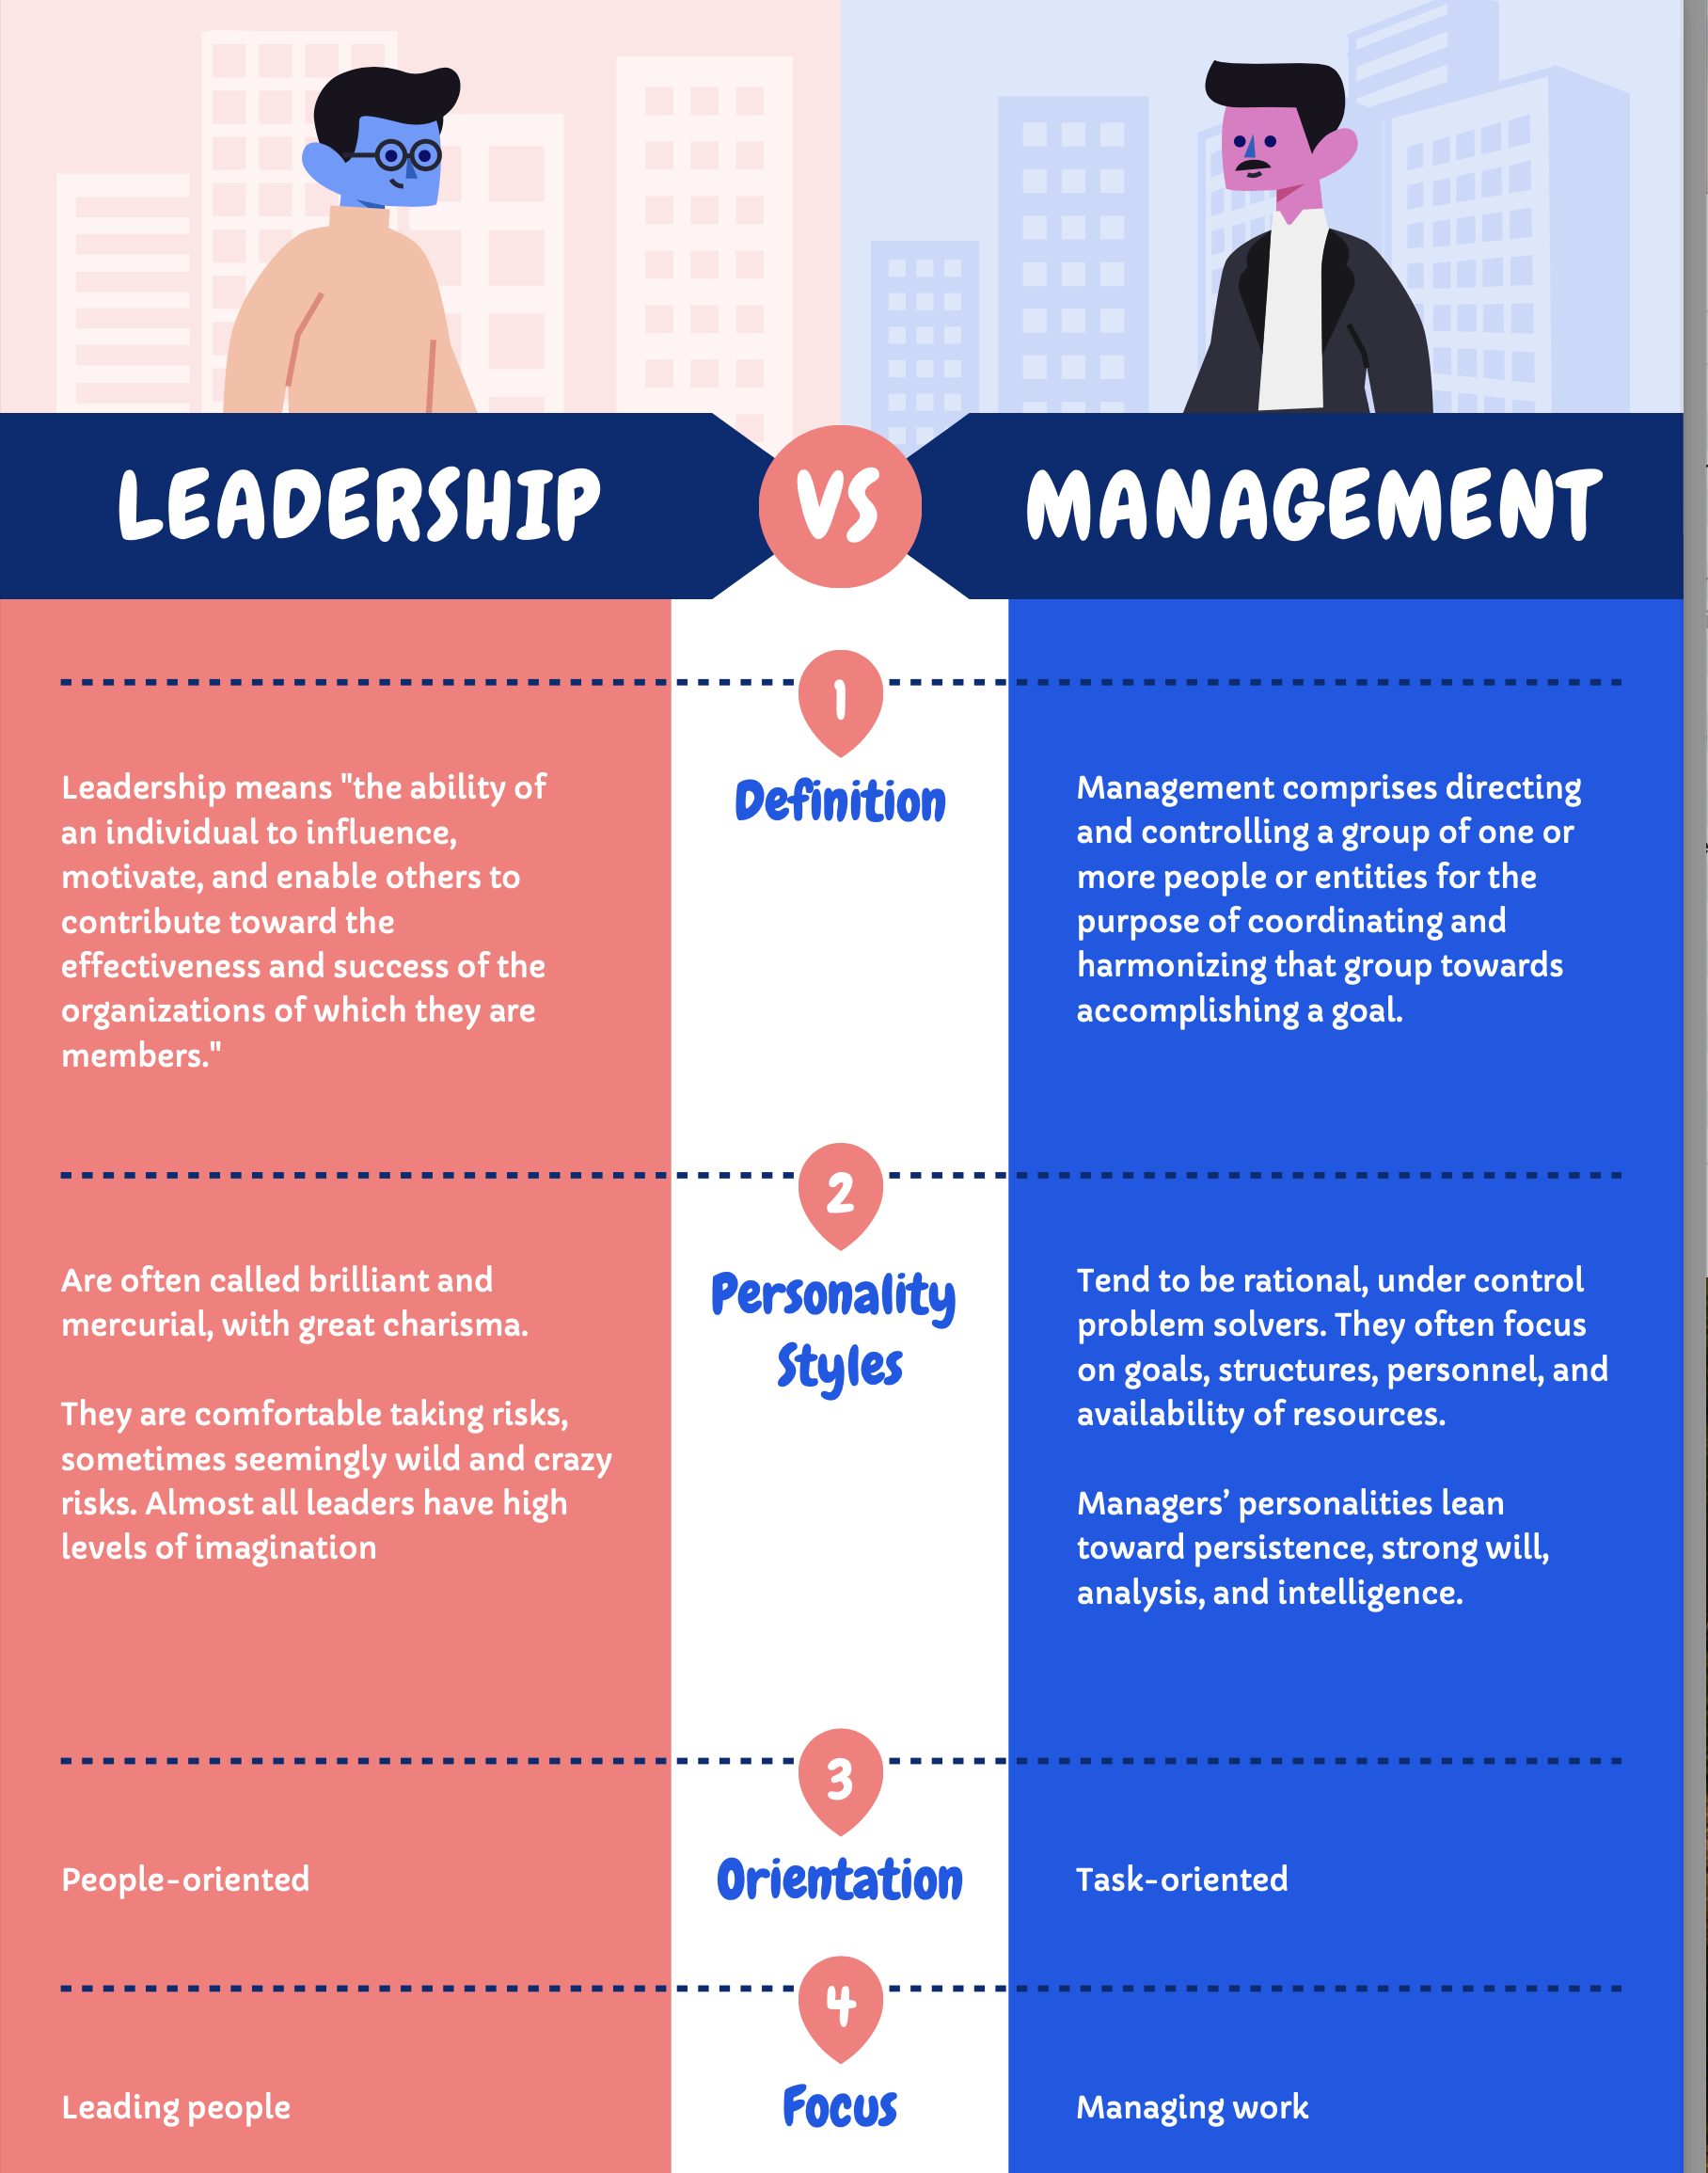 Leadership vs Management"